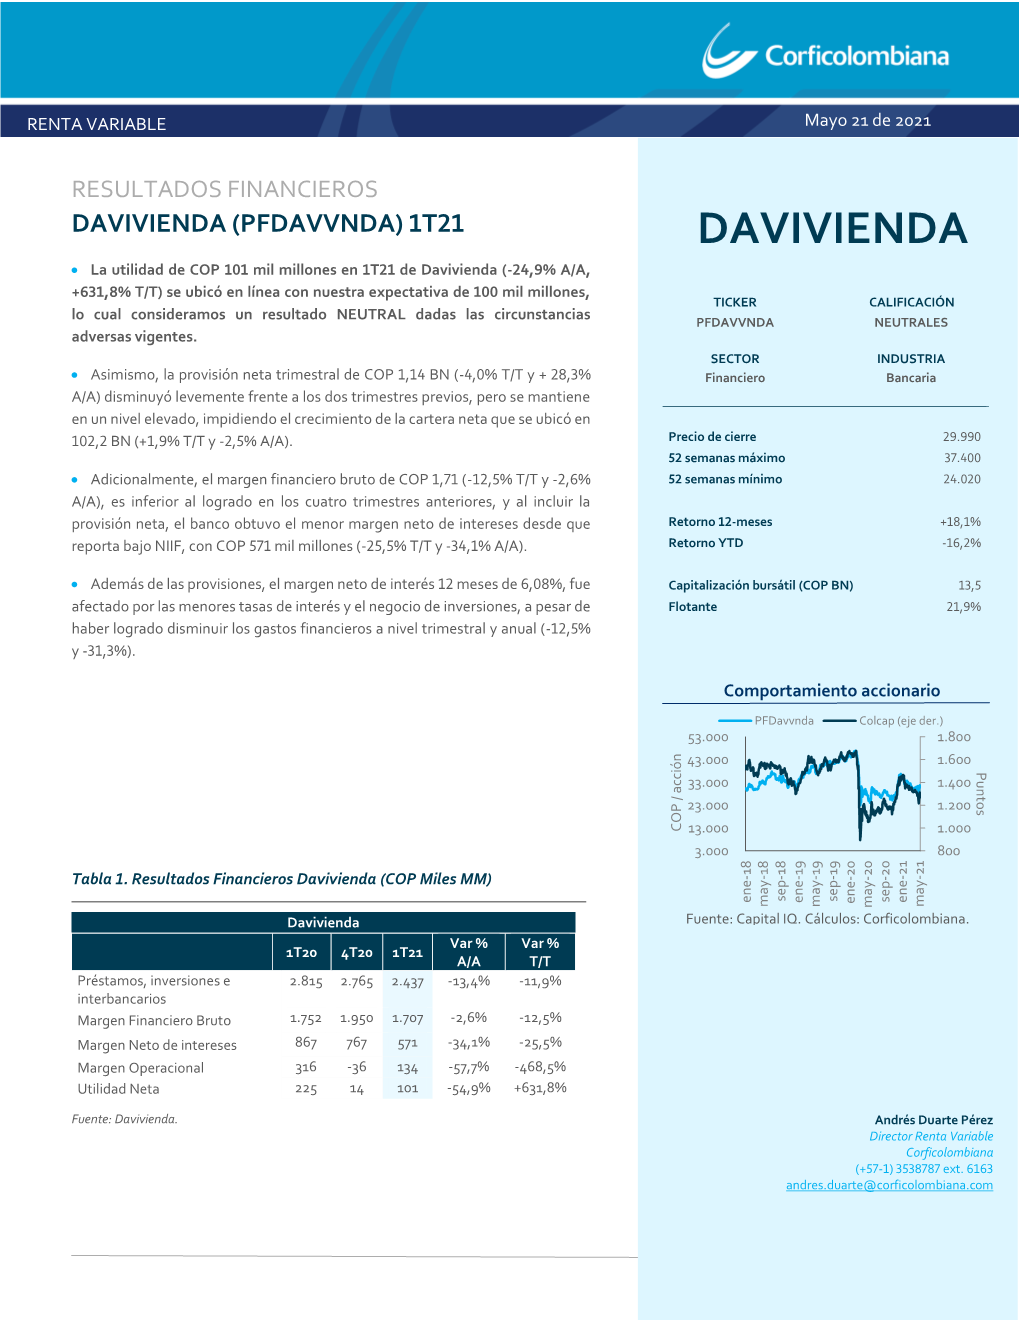 DAVIVIENDA (PFDAVVNDA) 1T21 DAVIVIENDA • La Utilidad De COP 101 Mil Millones En 1T21 De Davivienda (-24,9% A/A